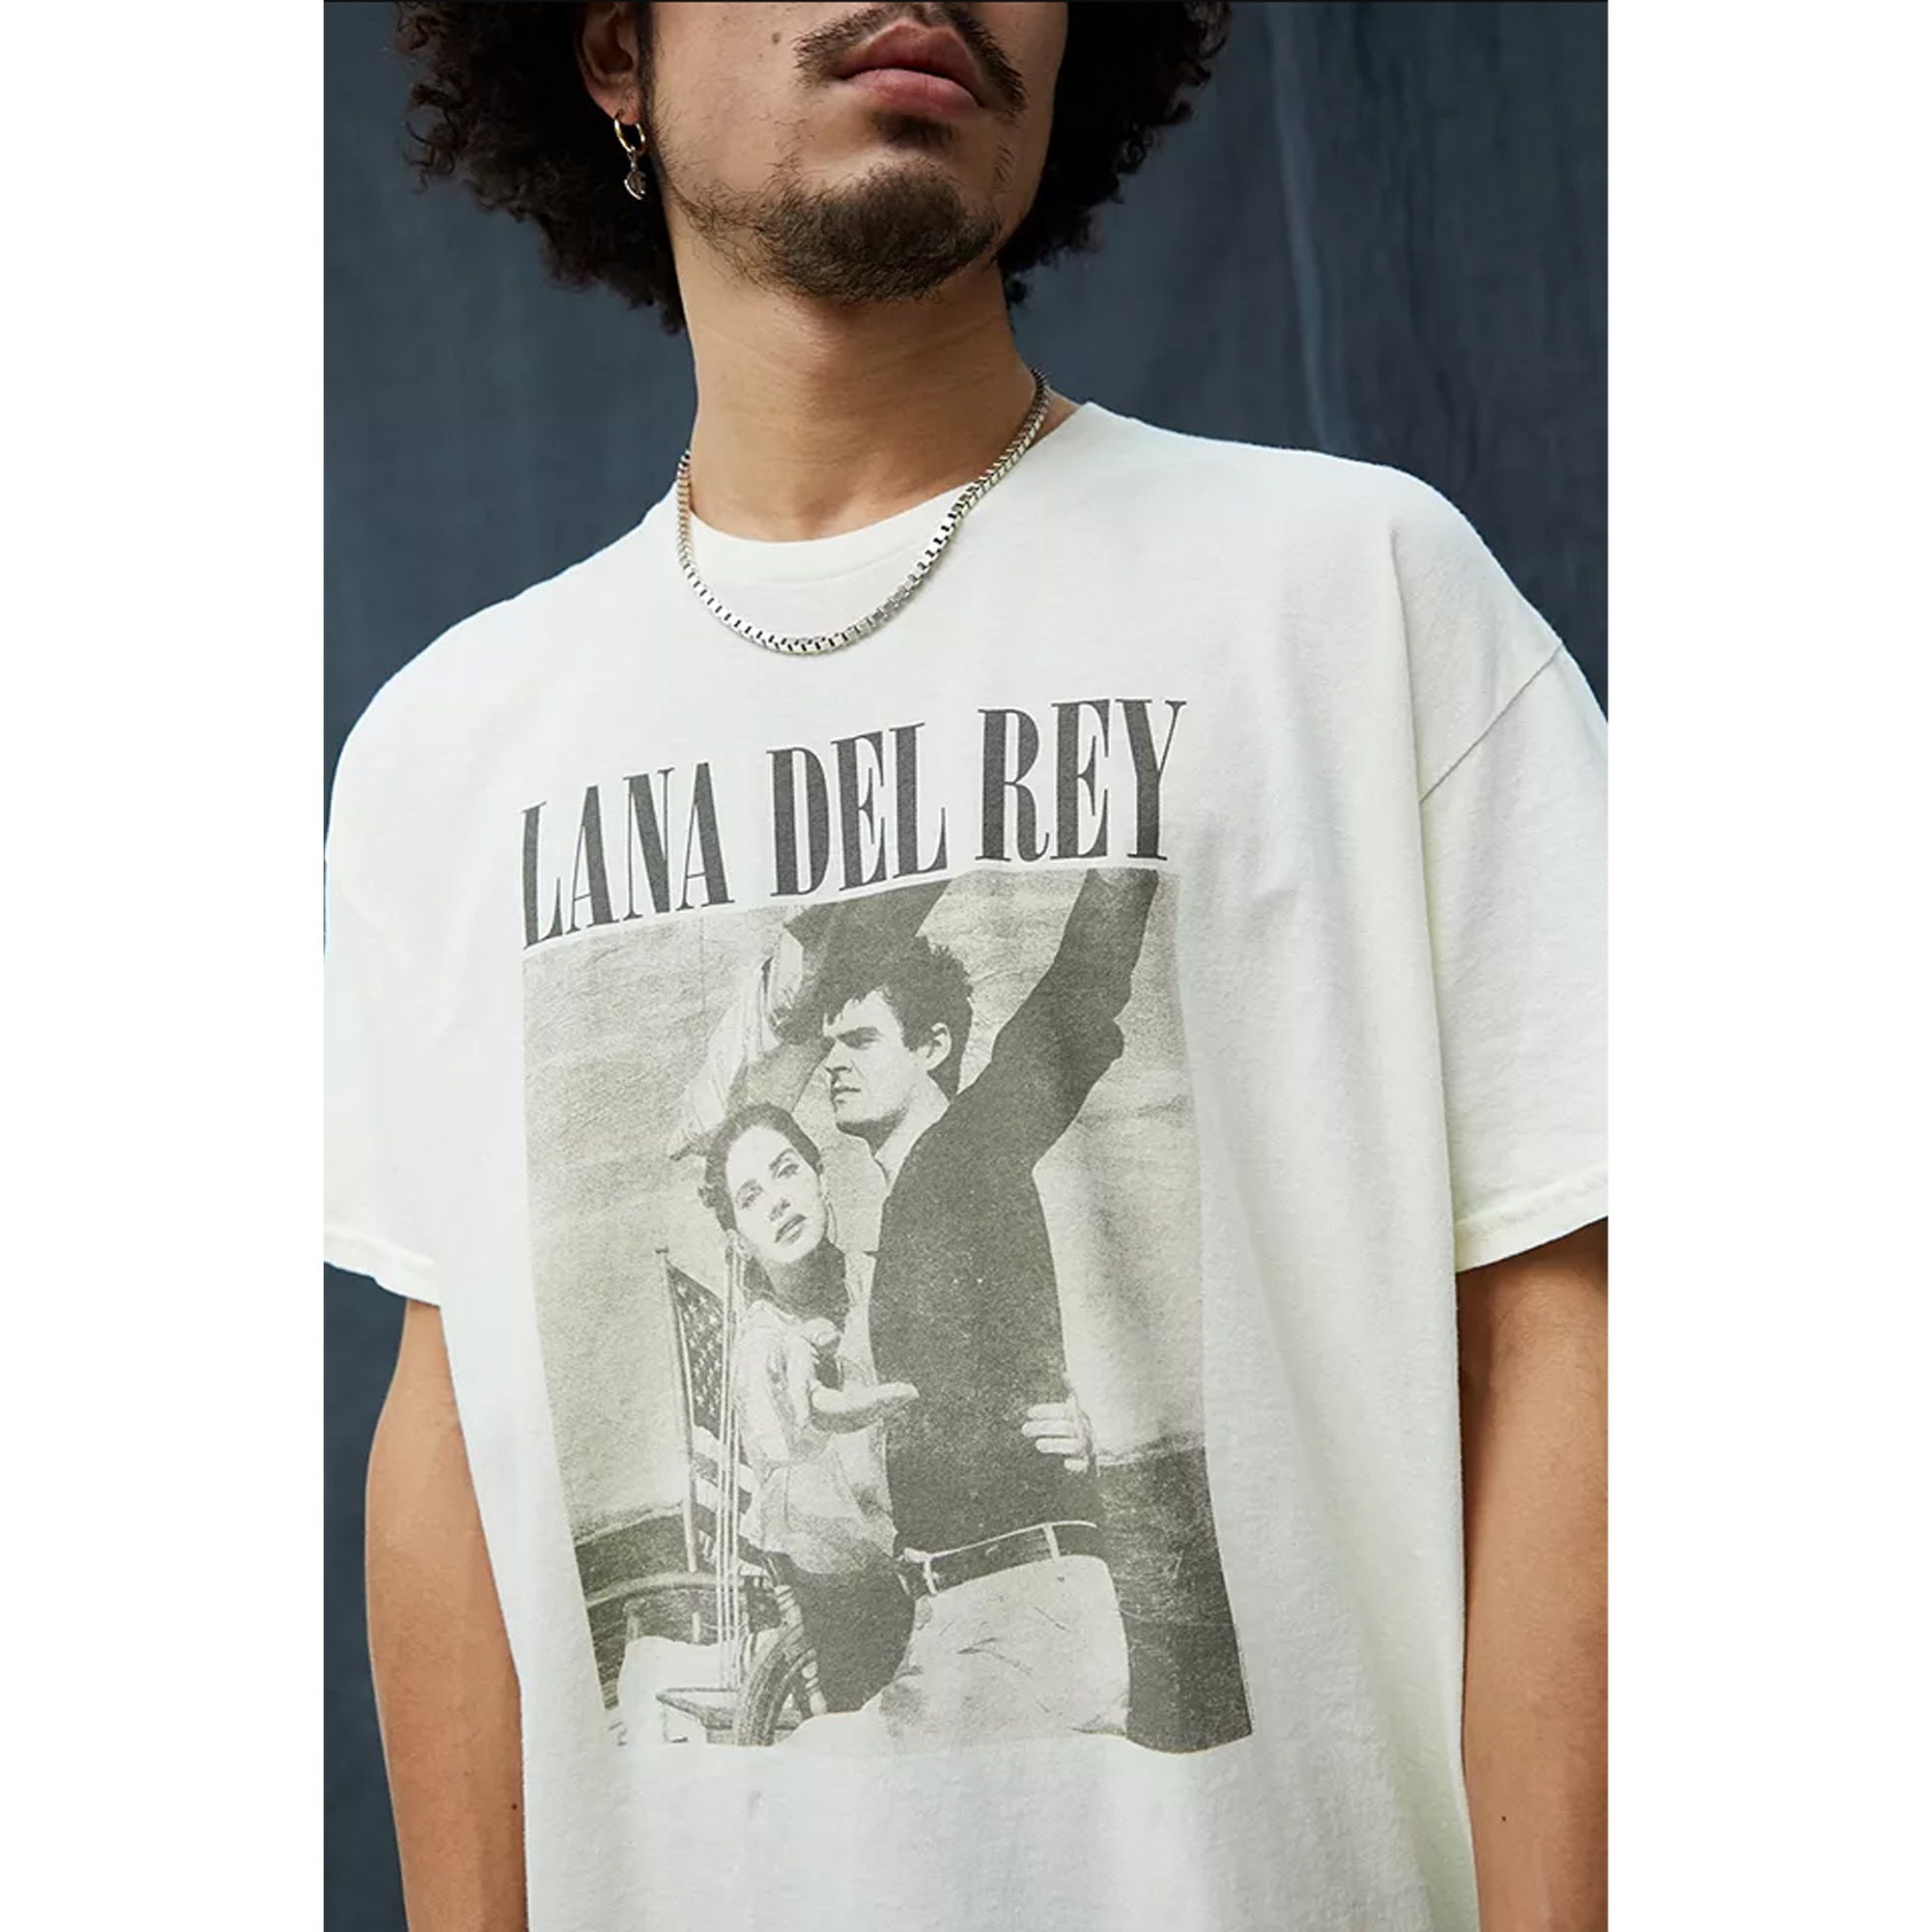 Discover Lana Del Rey Shirt, Lana Del Rey Album Shirt, Lana Del Rey Vintage T shirt